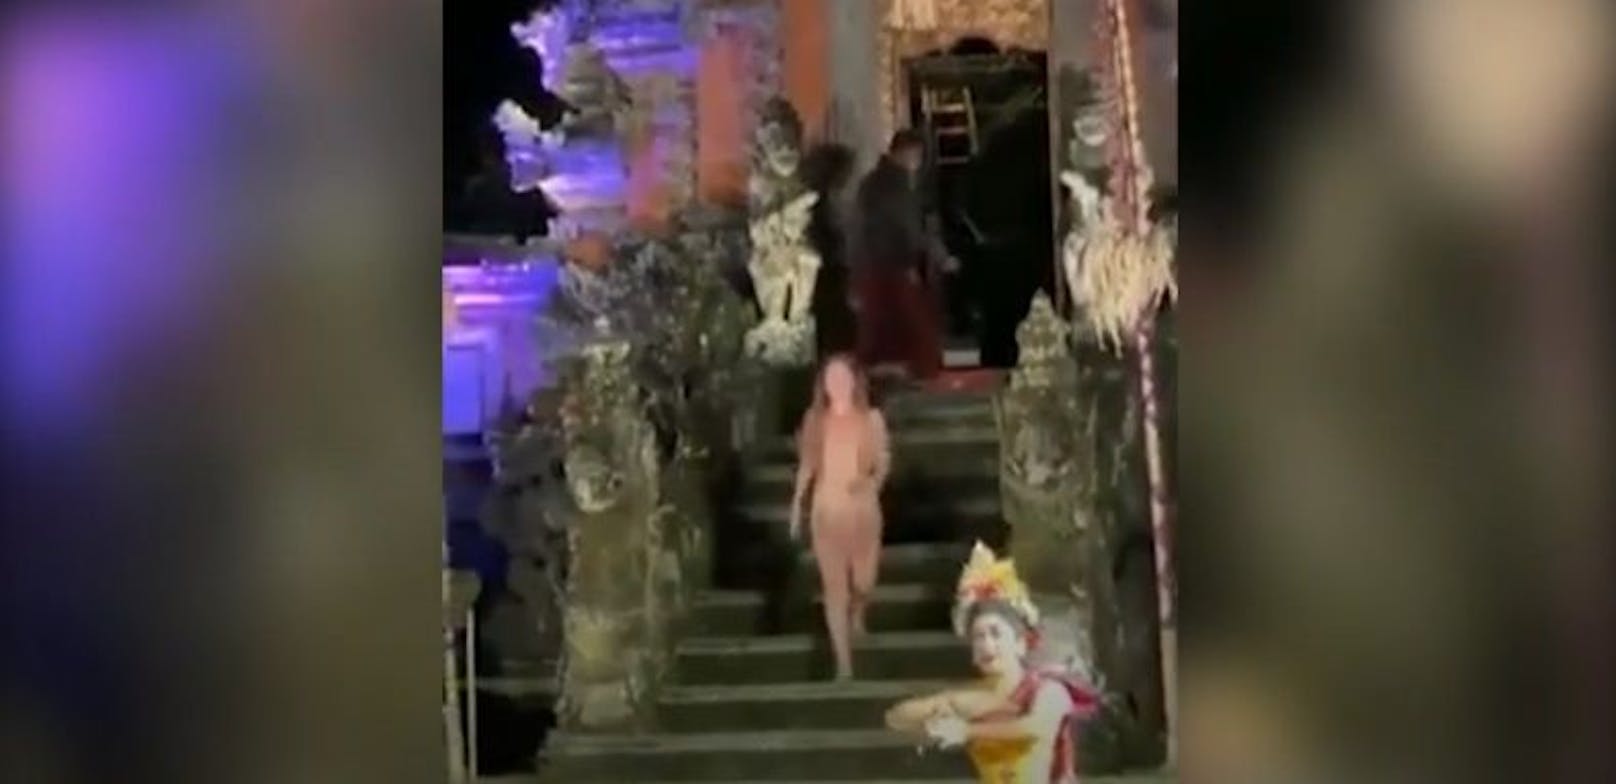 Frau (28) lief nackt durch Bali-Tempel – nun droht Haft